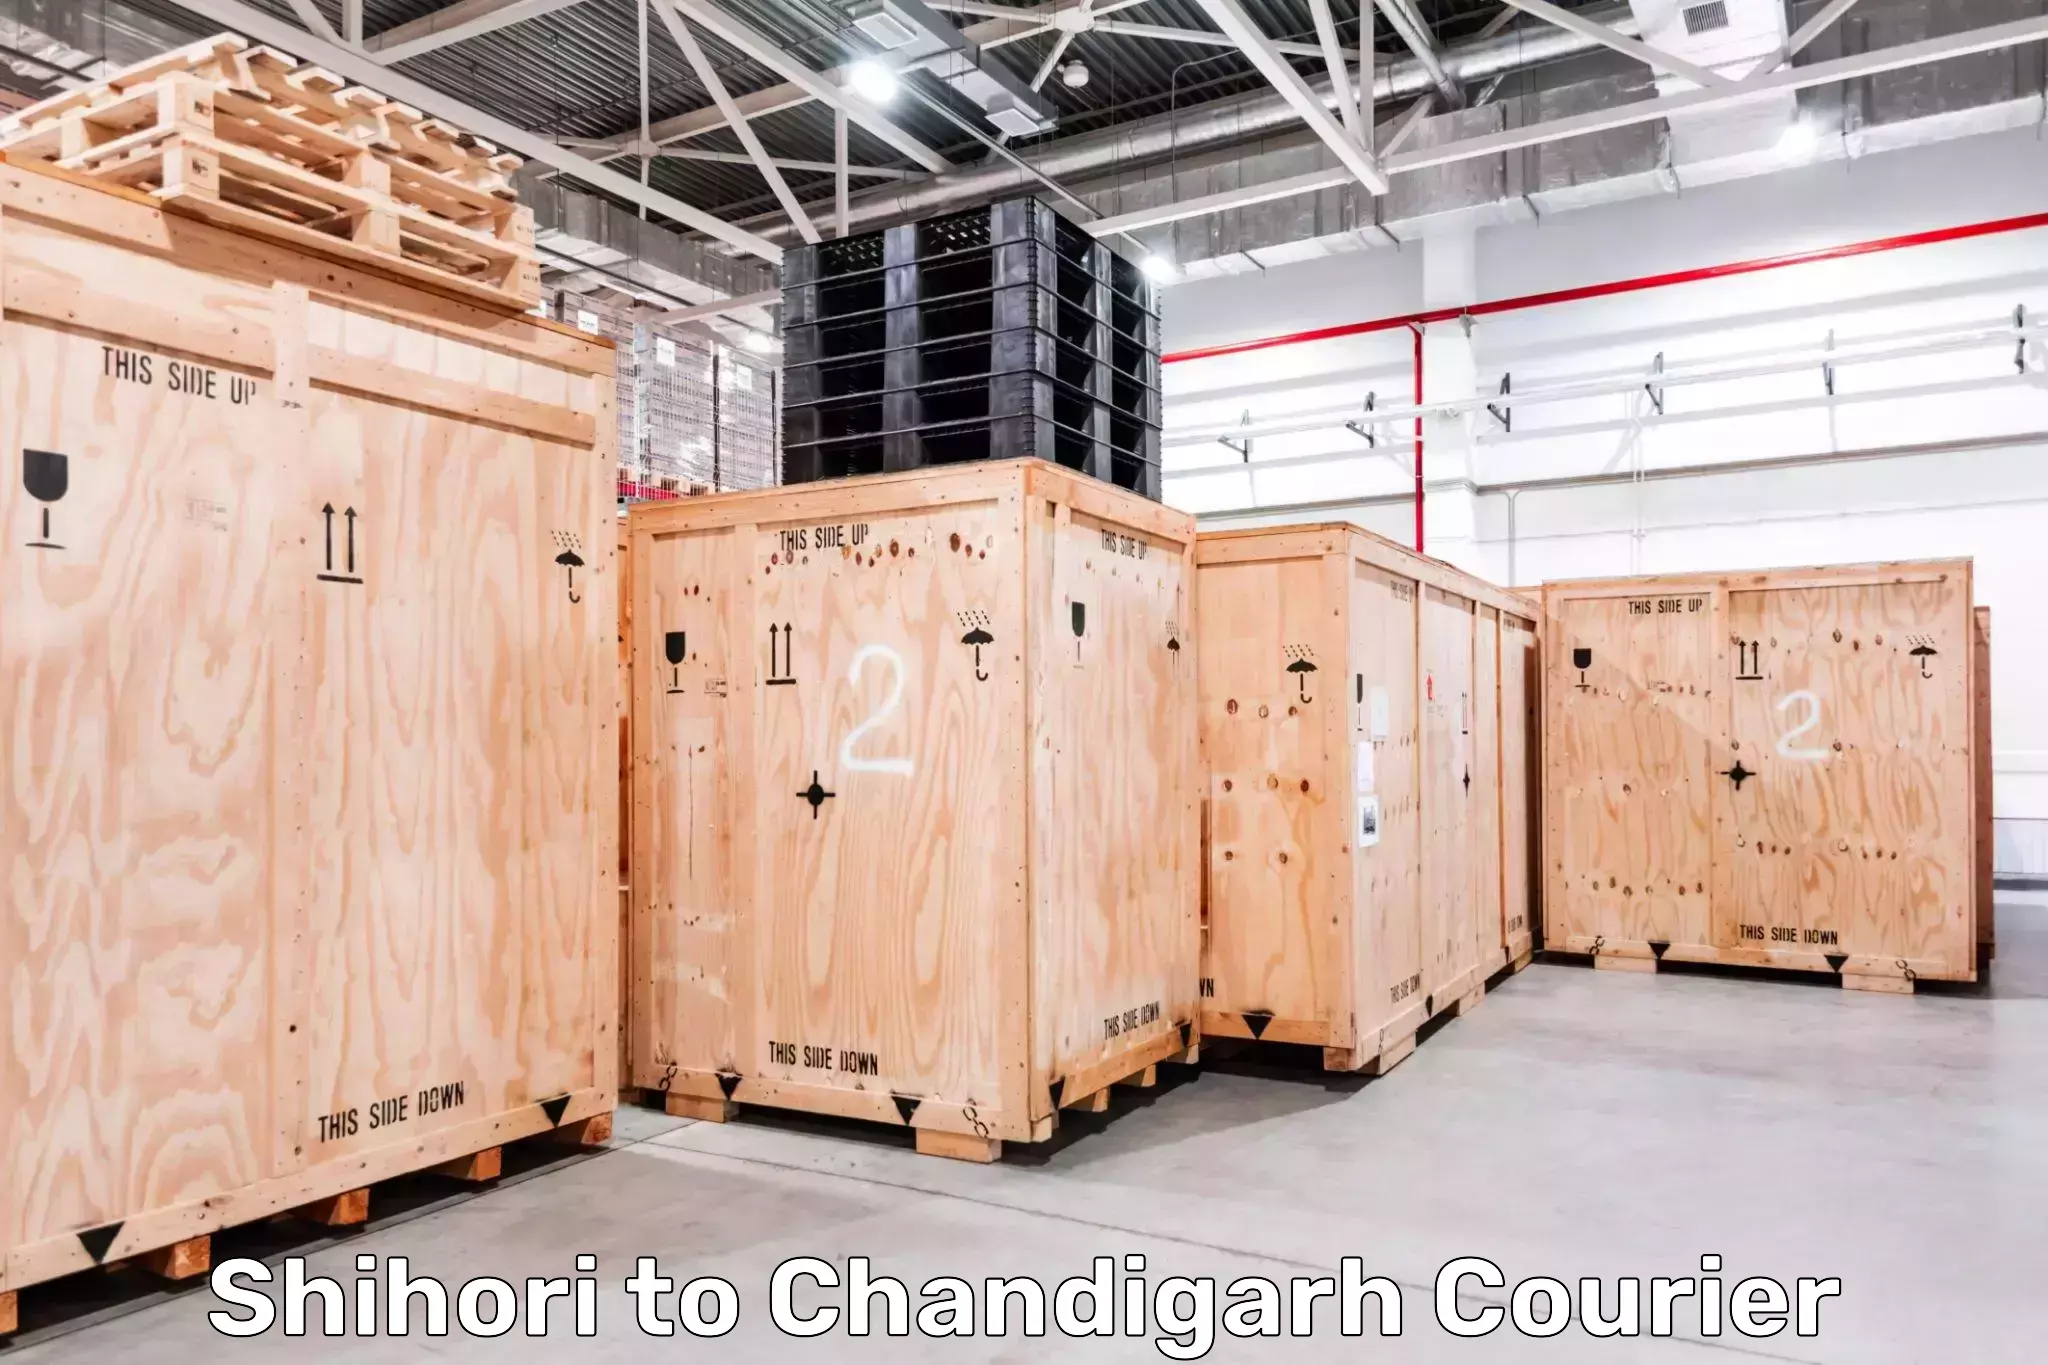 Supply chain delivery Shihori to Chandigarh